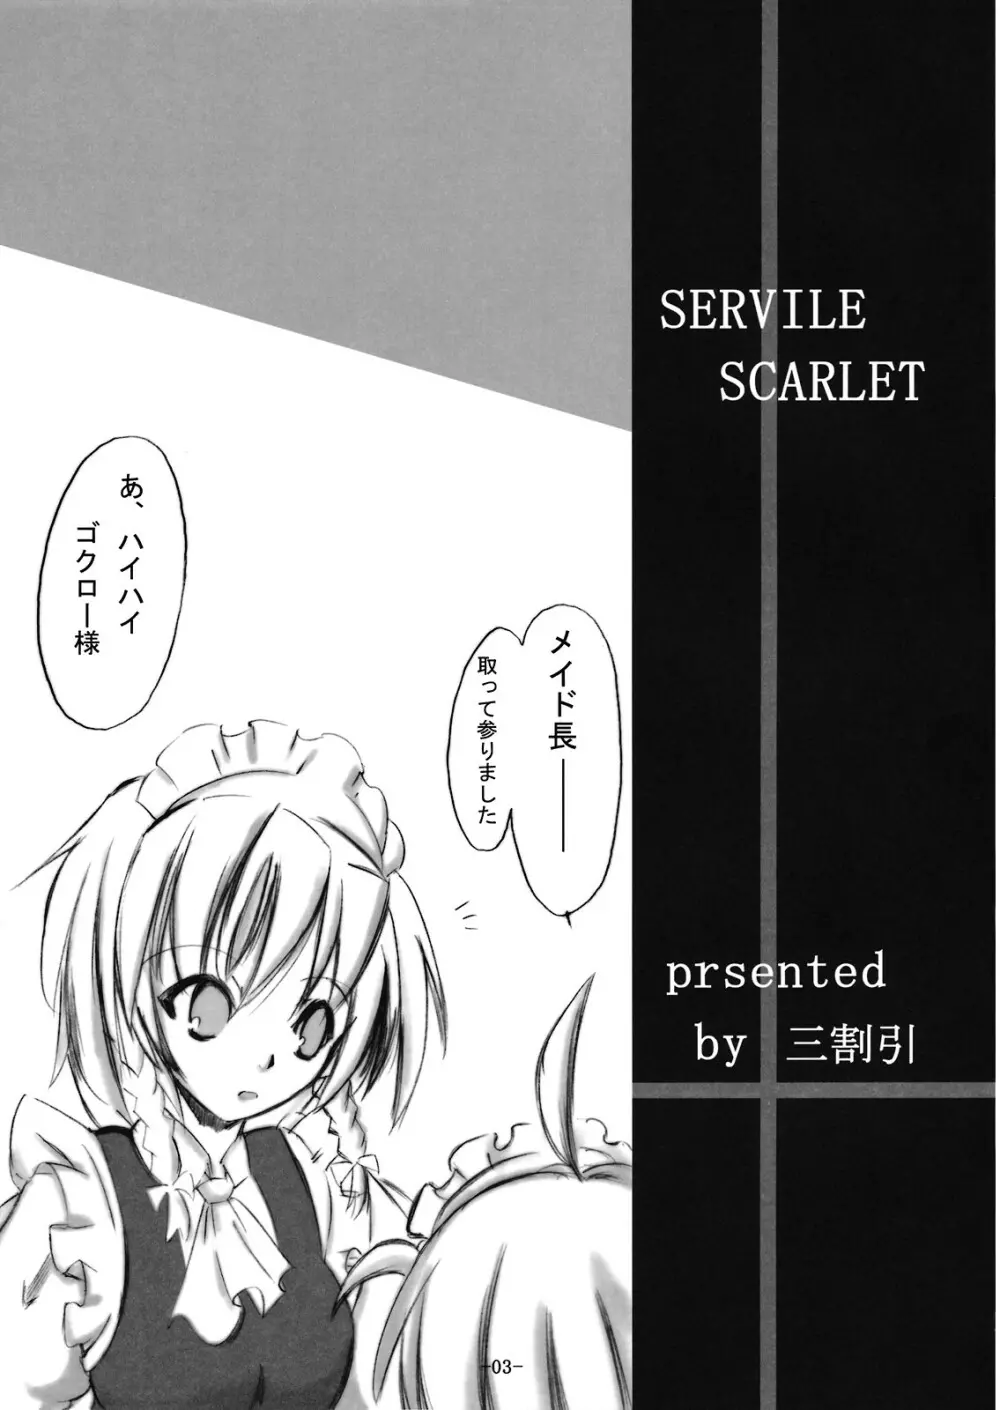 Servile Scarlet - page3